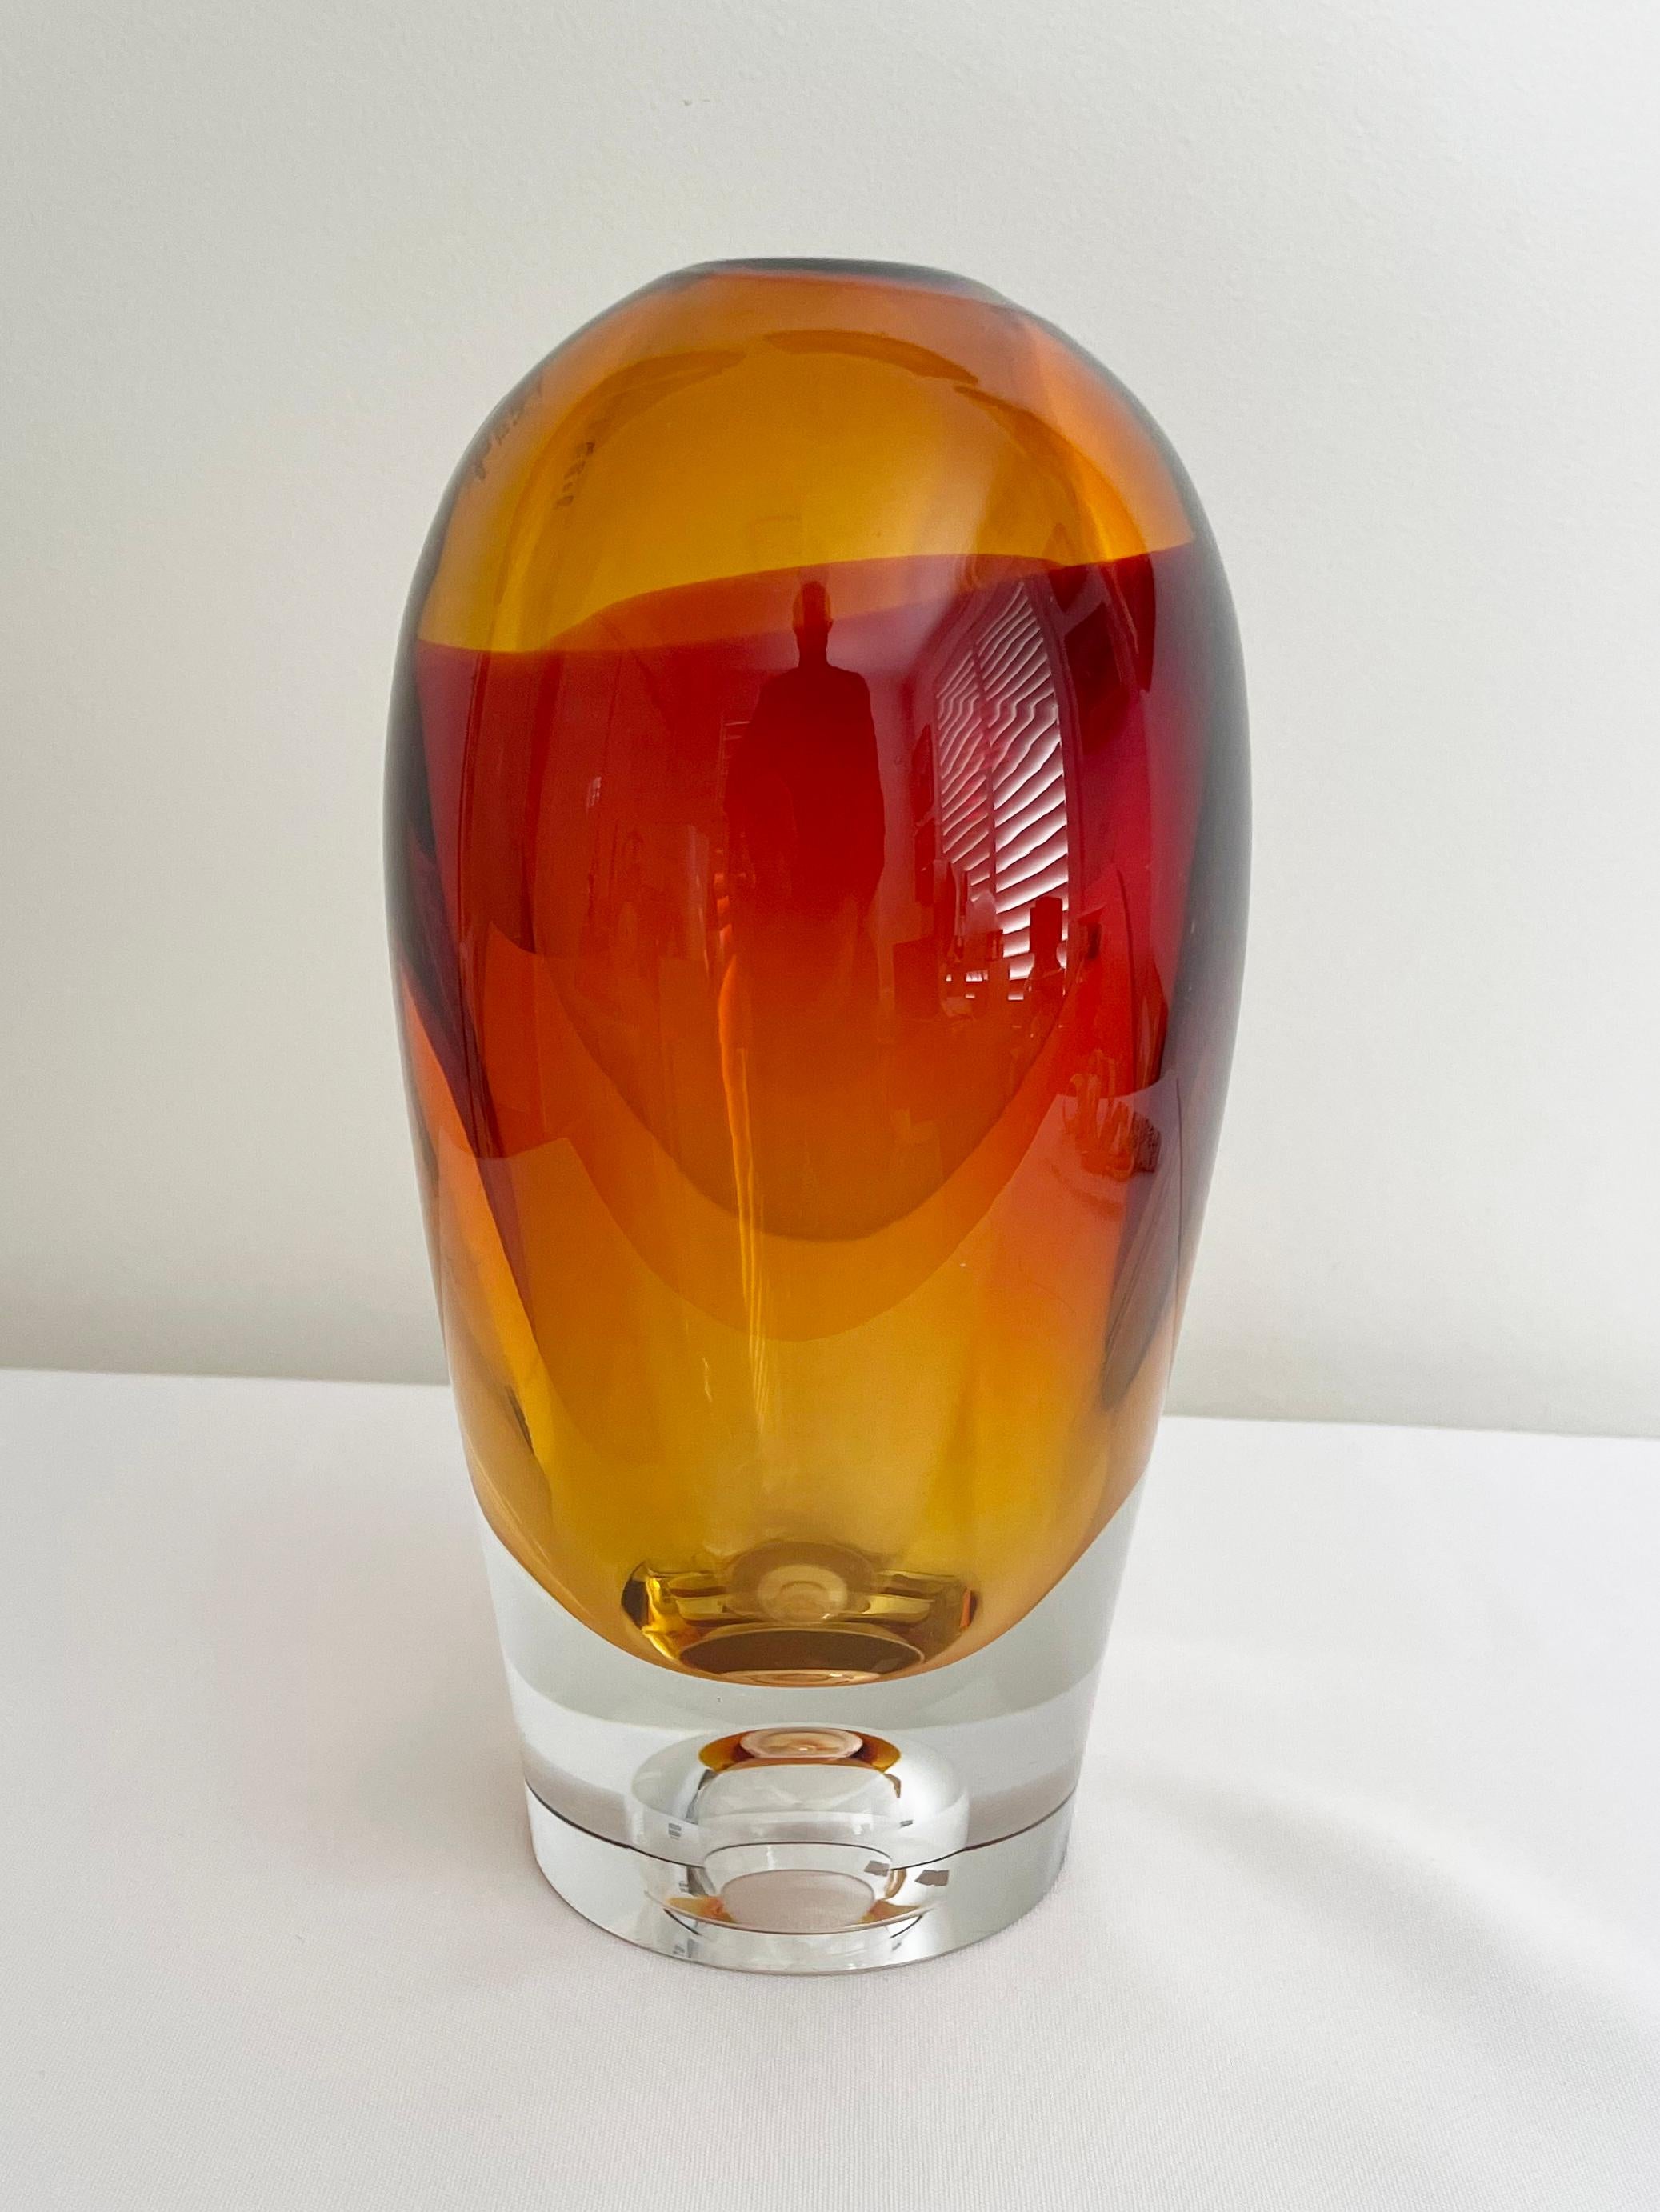 Kosta Boda orange Vision series vase designed by the legendary glass artist Göran Wärff.

Vision is handblown at Kosta Glassworks in Sweden and is part of the Kosta Boda Artist Collection.